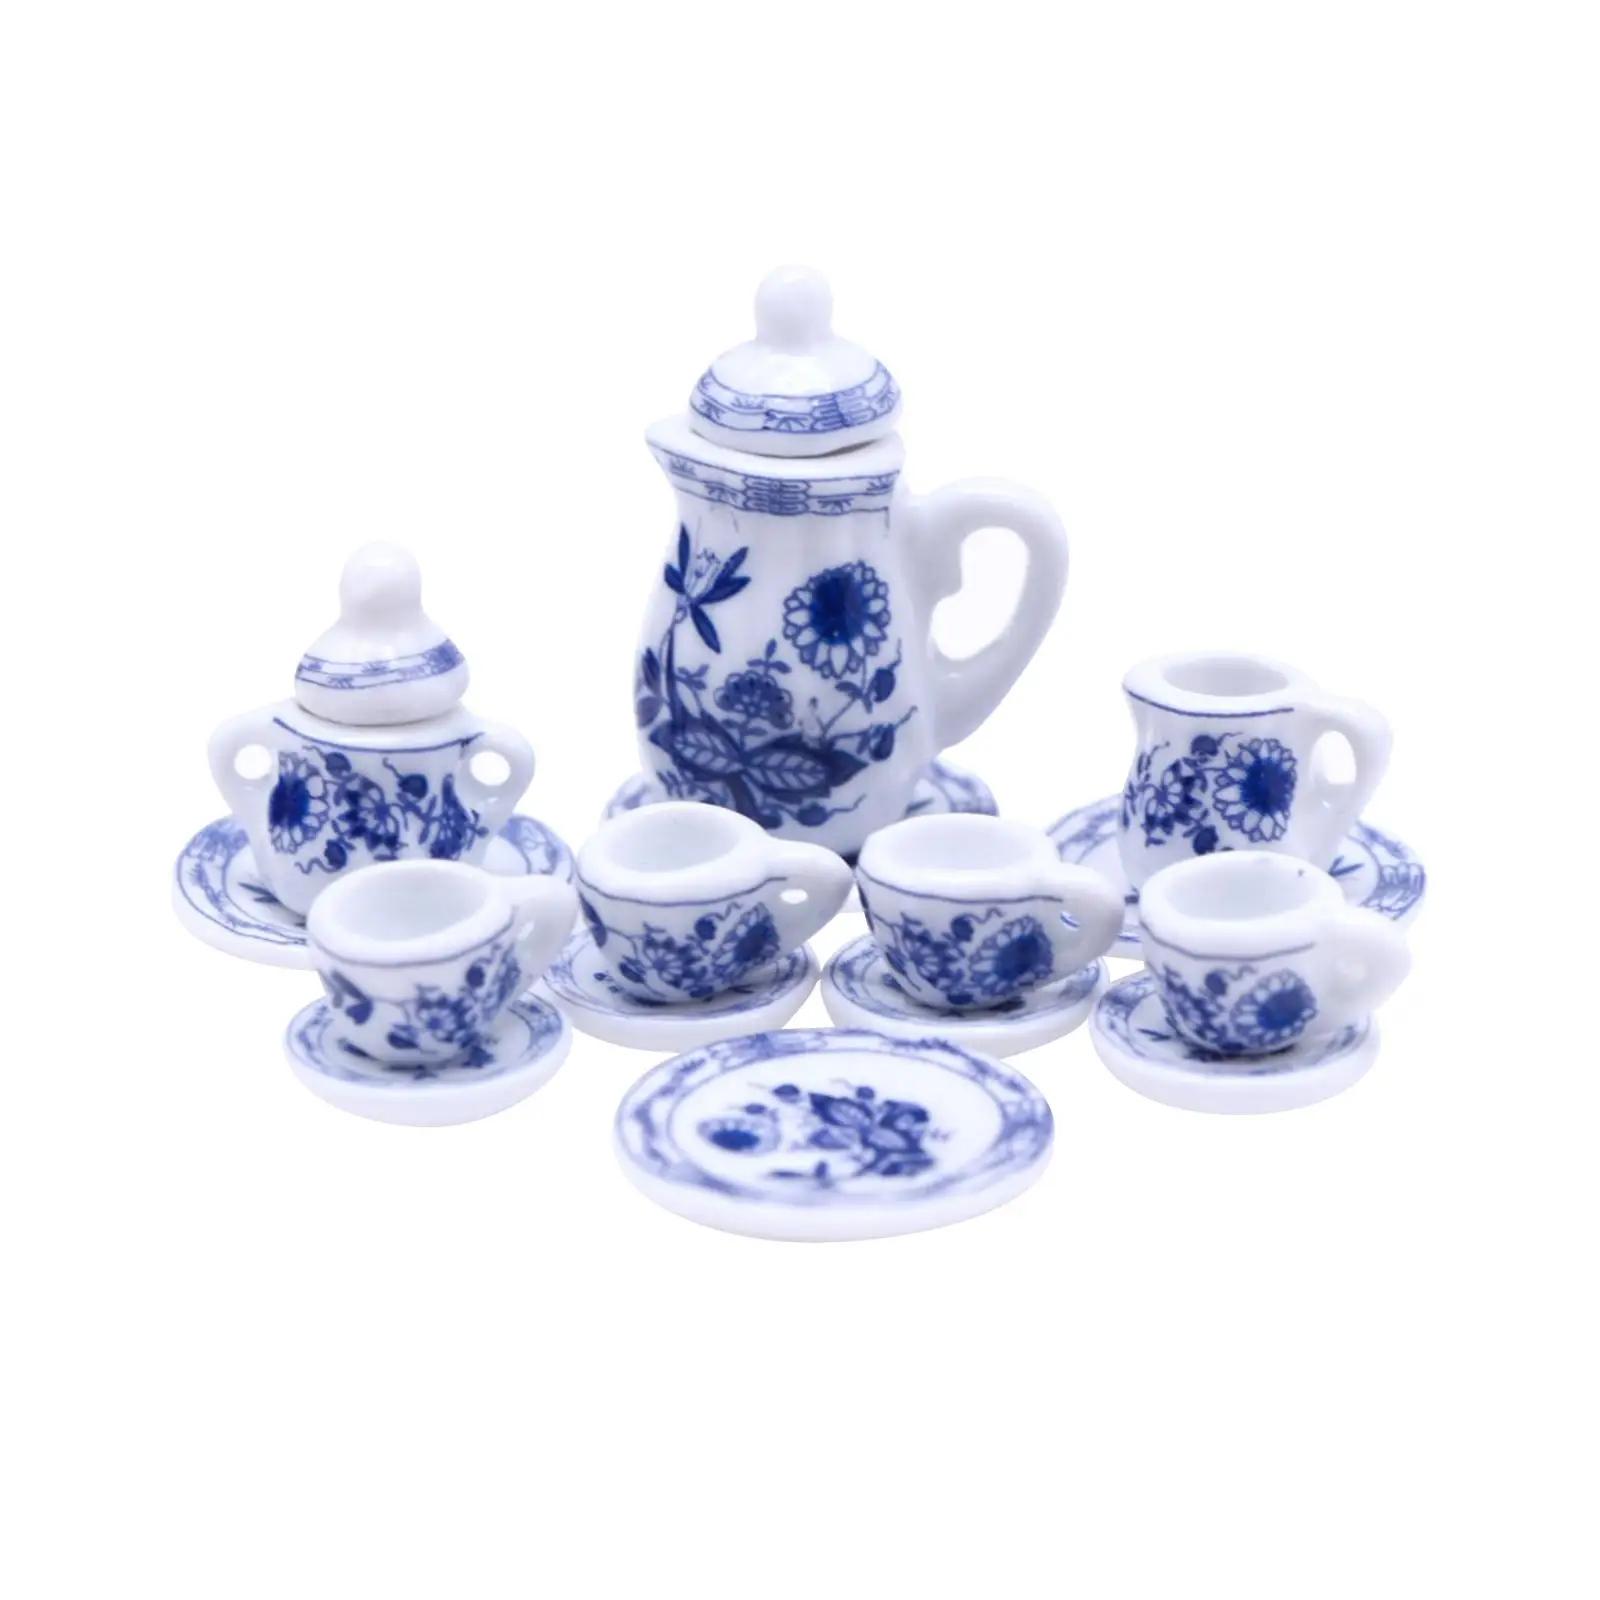 15 Pieces Dollhouse Miniature Teapot Cup Mini Tea Cup Models Photo Props Home Decor 1:12 Dollhouse Ceramic for Living Room